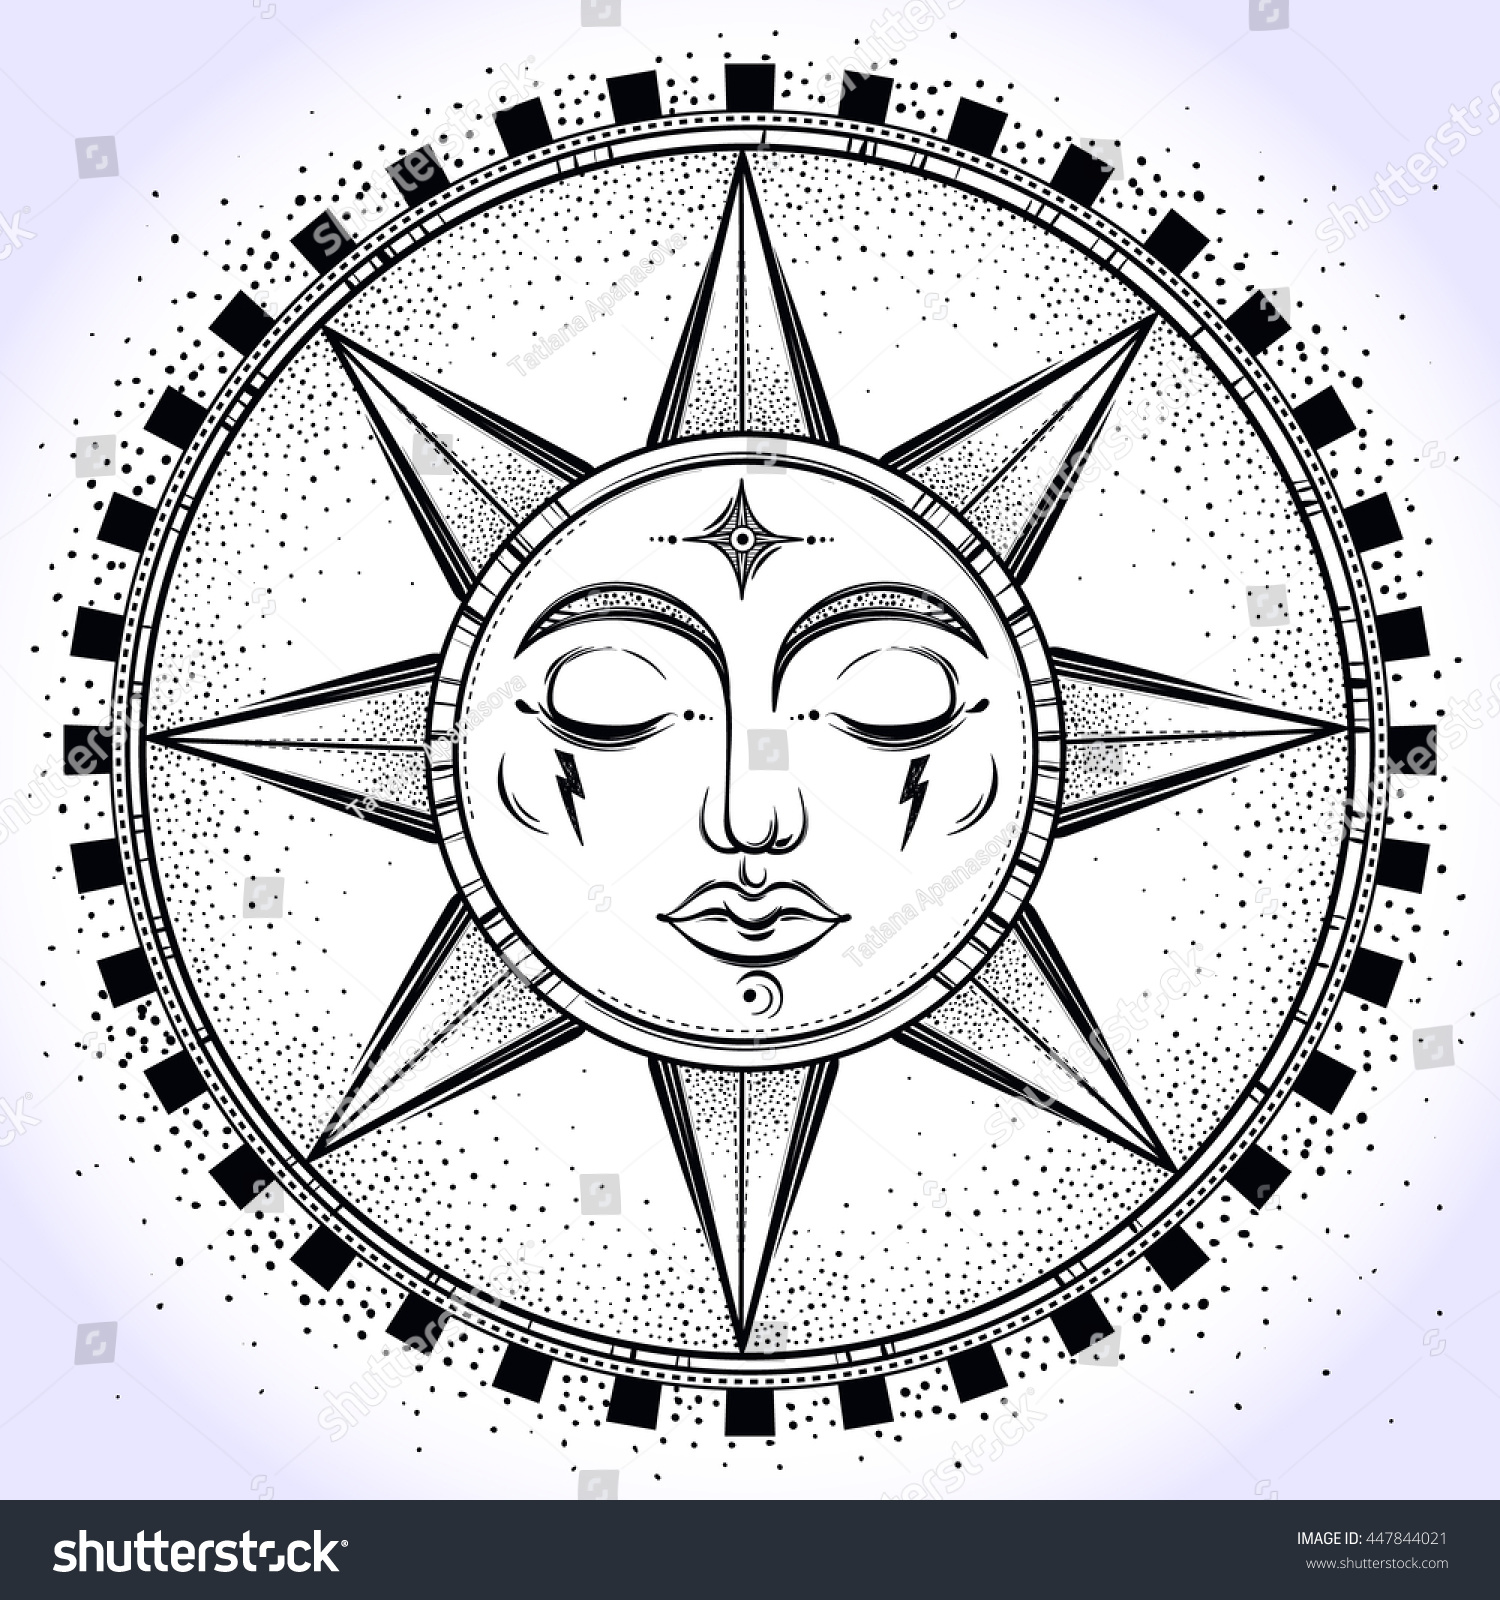 Download Vintage Hand Drawn Sun Vector Illustration Stock Vector 447844021 - Shutterstock